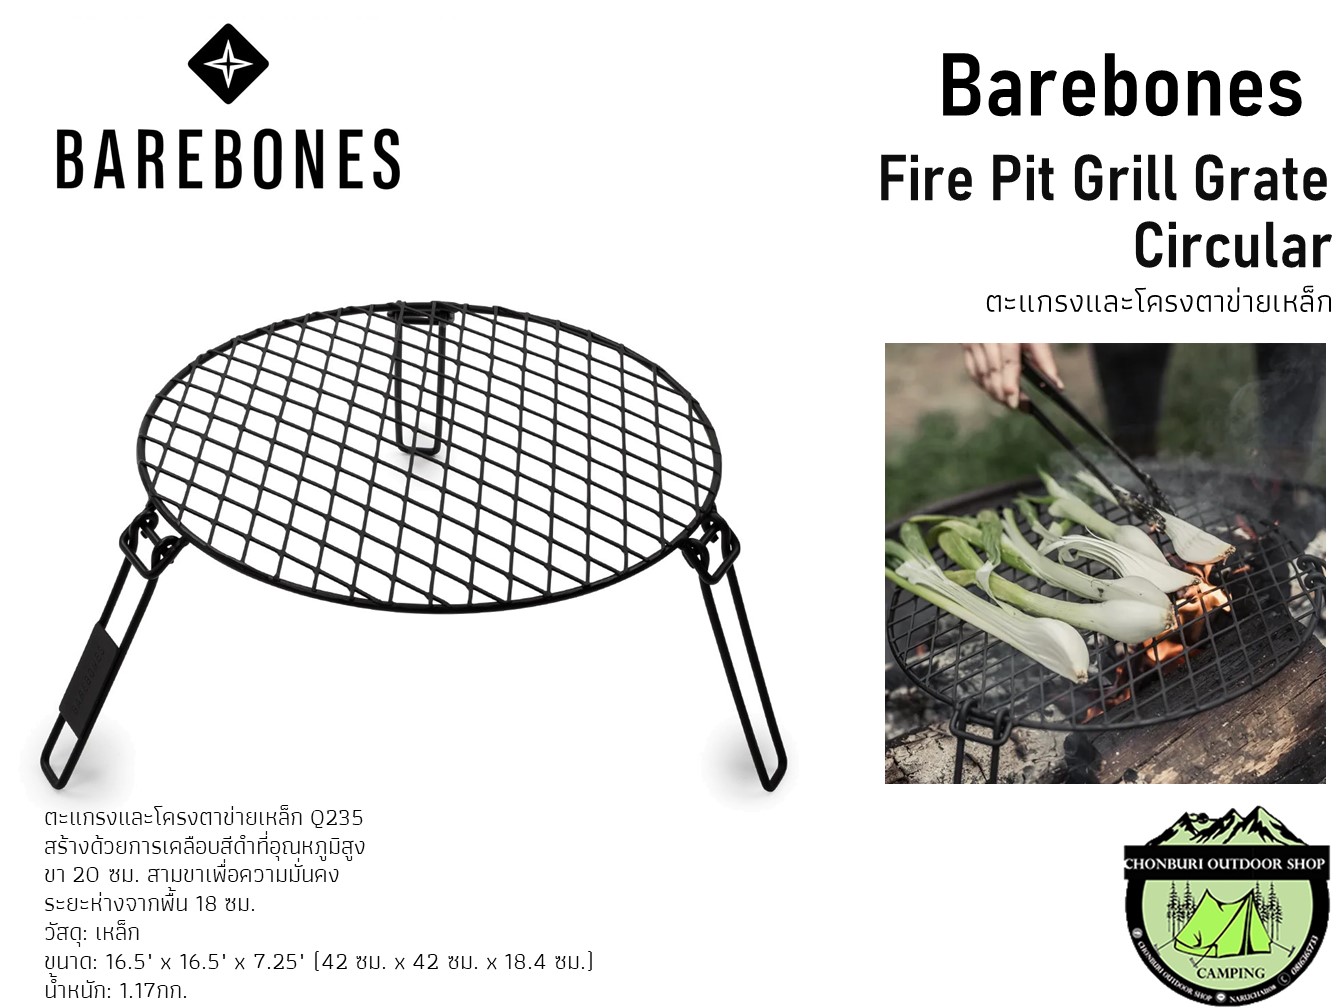 Barebones Fire Pit Grill Grate (Circular)ตะแกรงและโครงตาข่ายเหล็กวงกลม